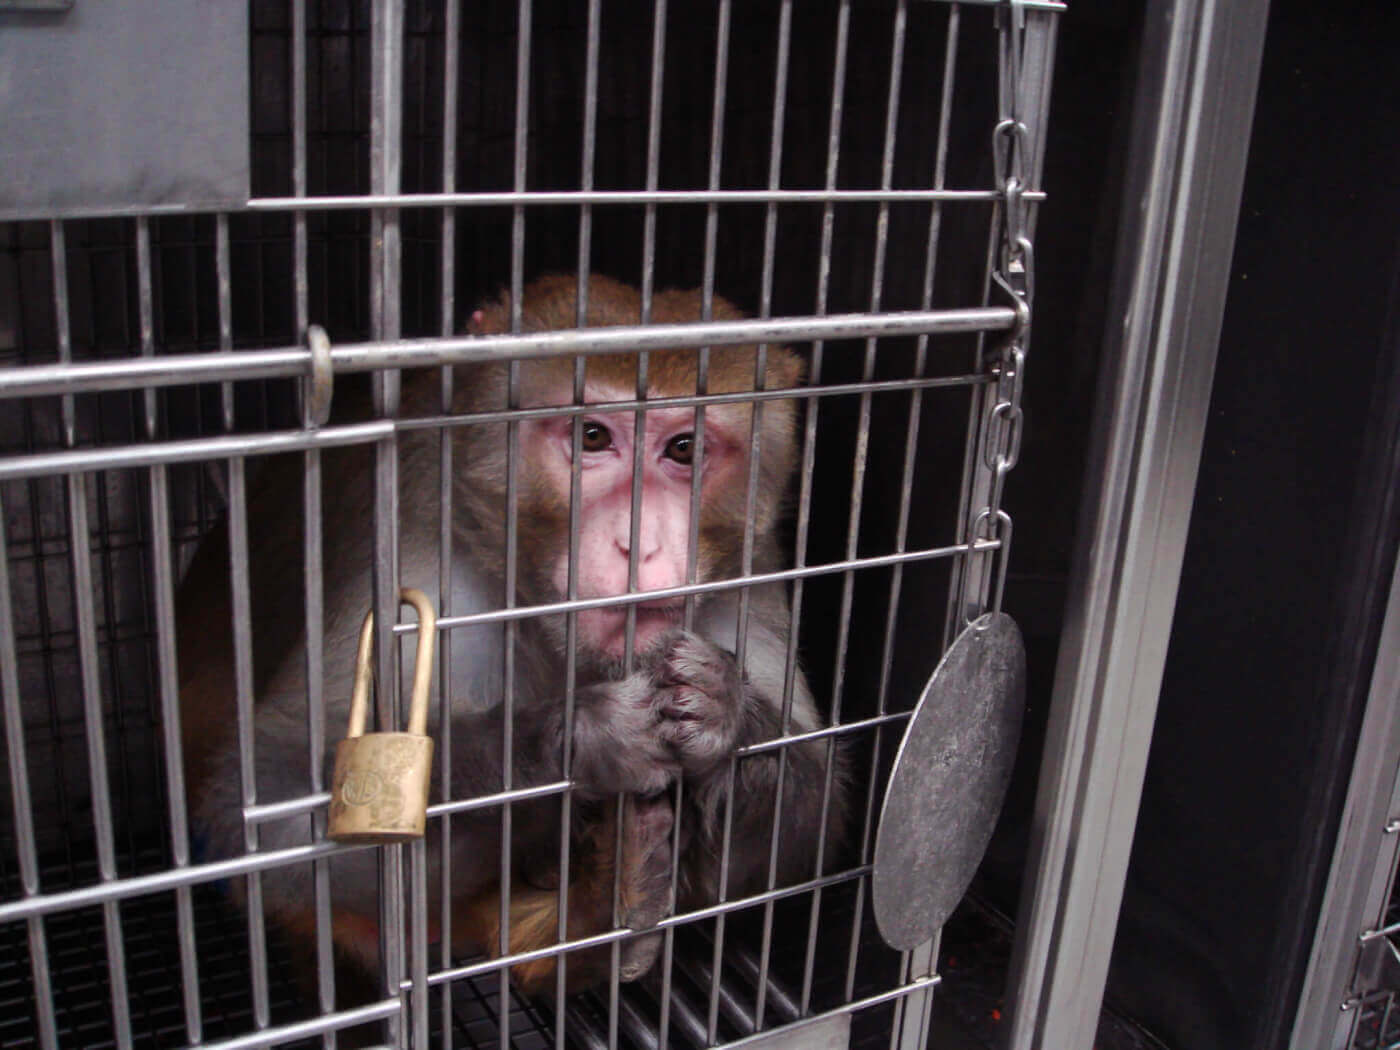 Milo the monkey caged